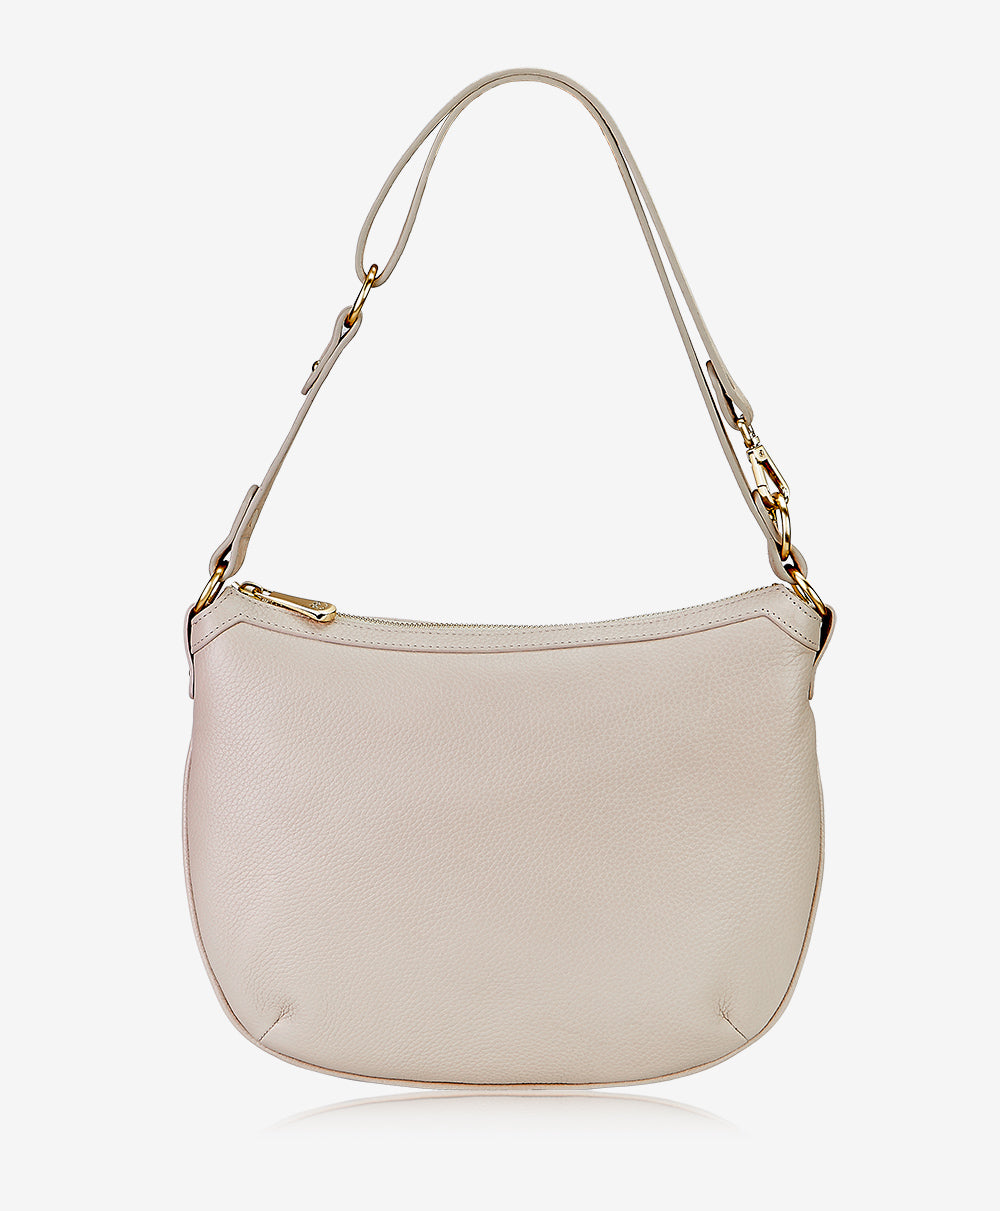 White Crescent Shoulder Bags for Women, Cute Hobo Tote Handbag